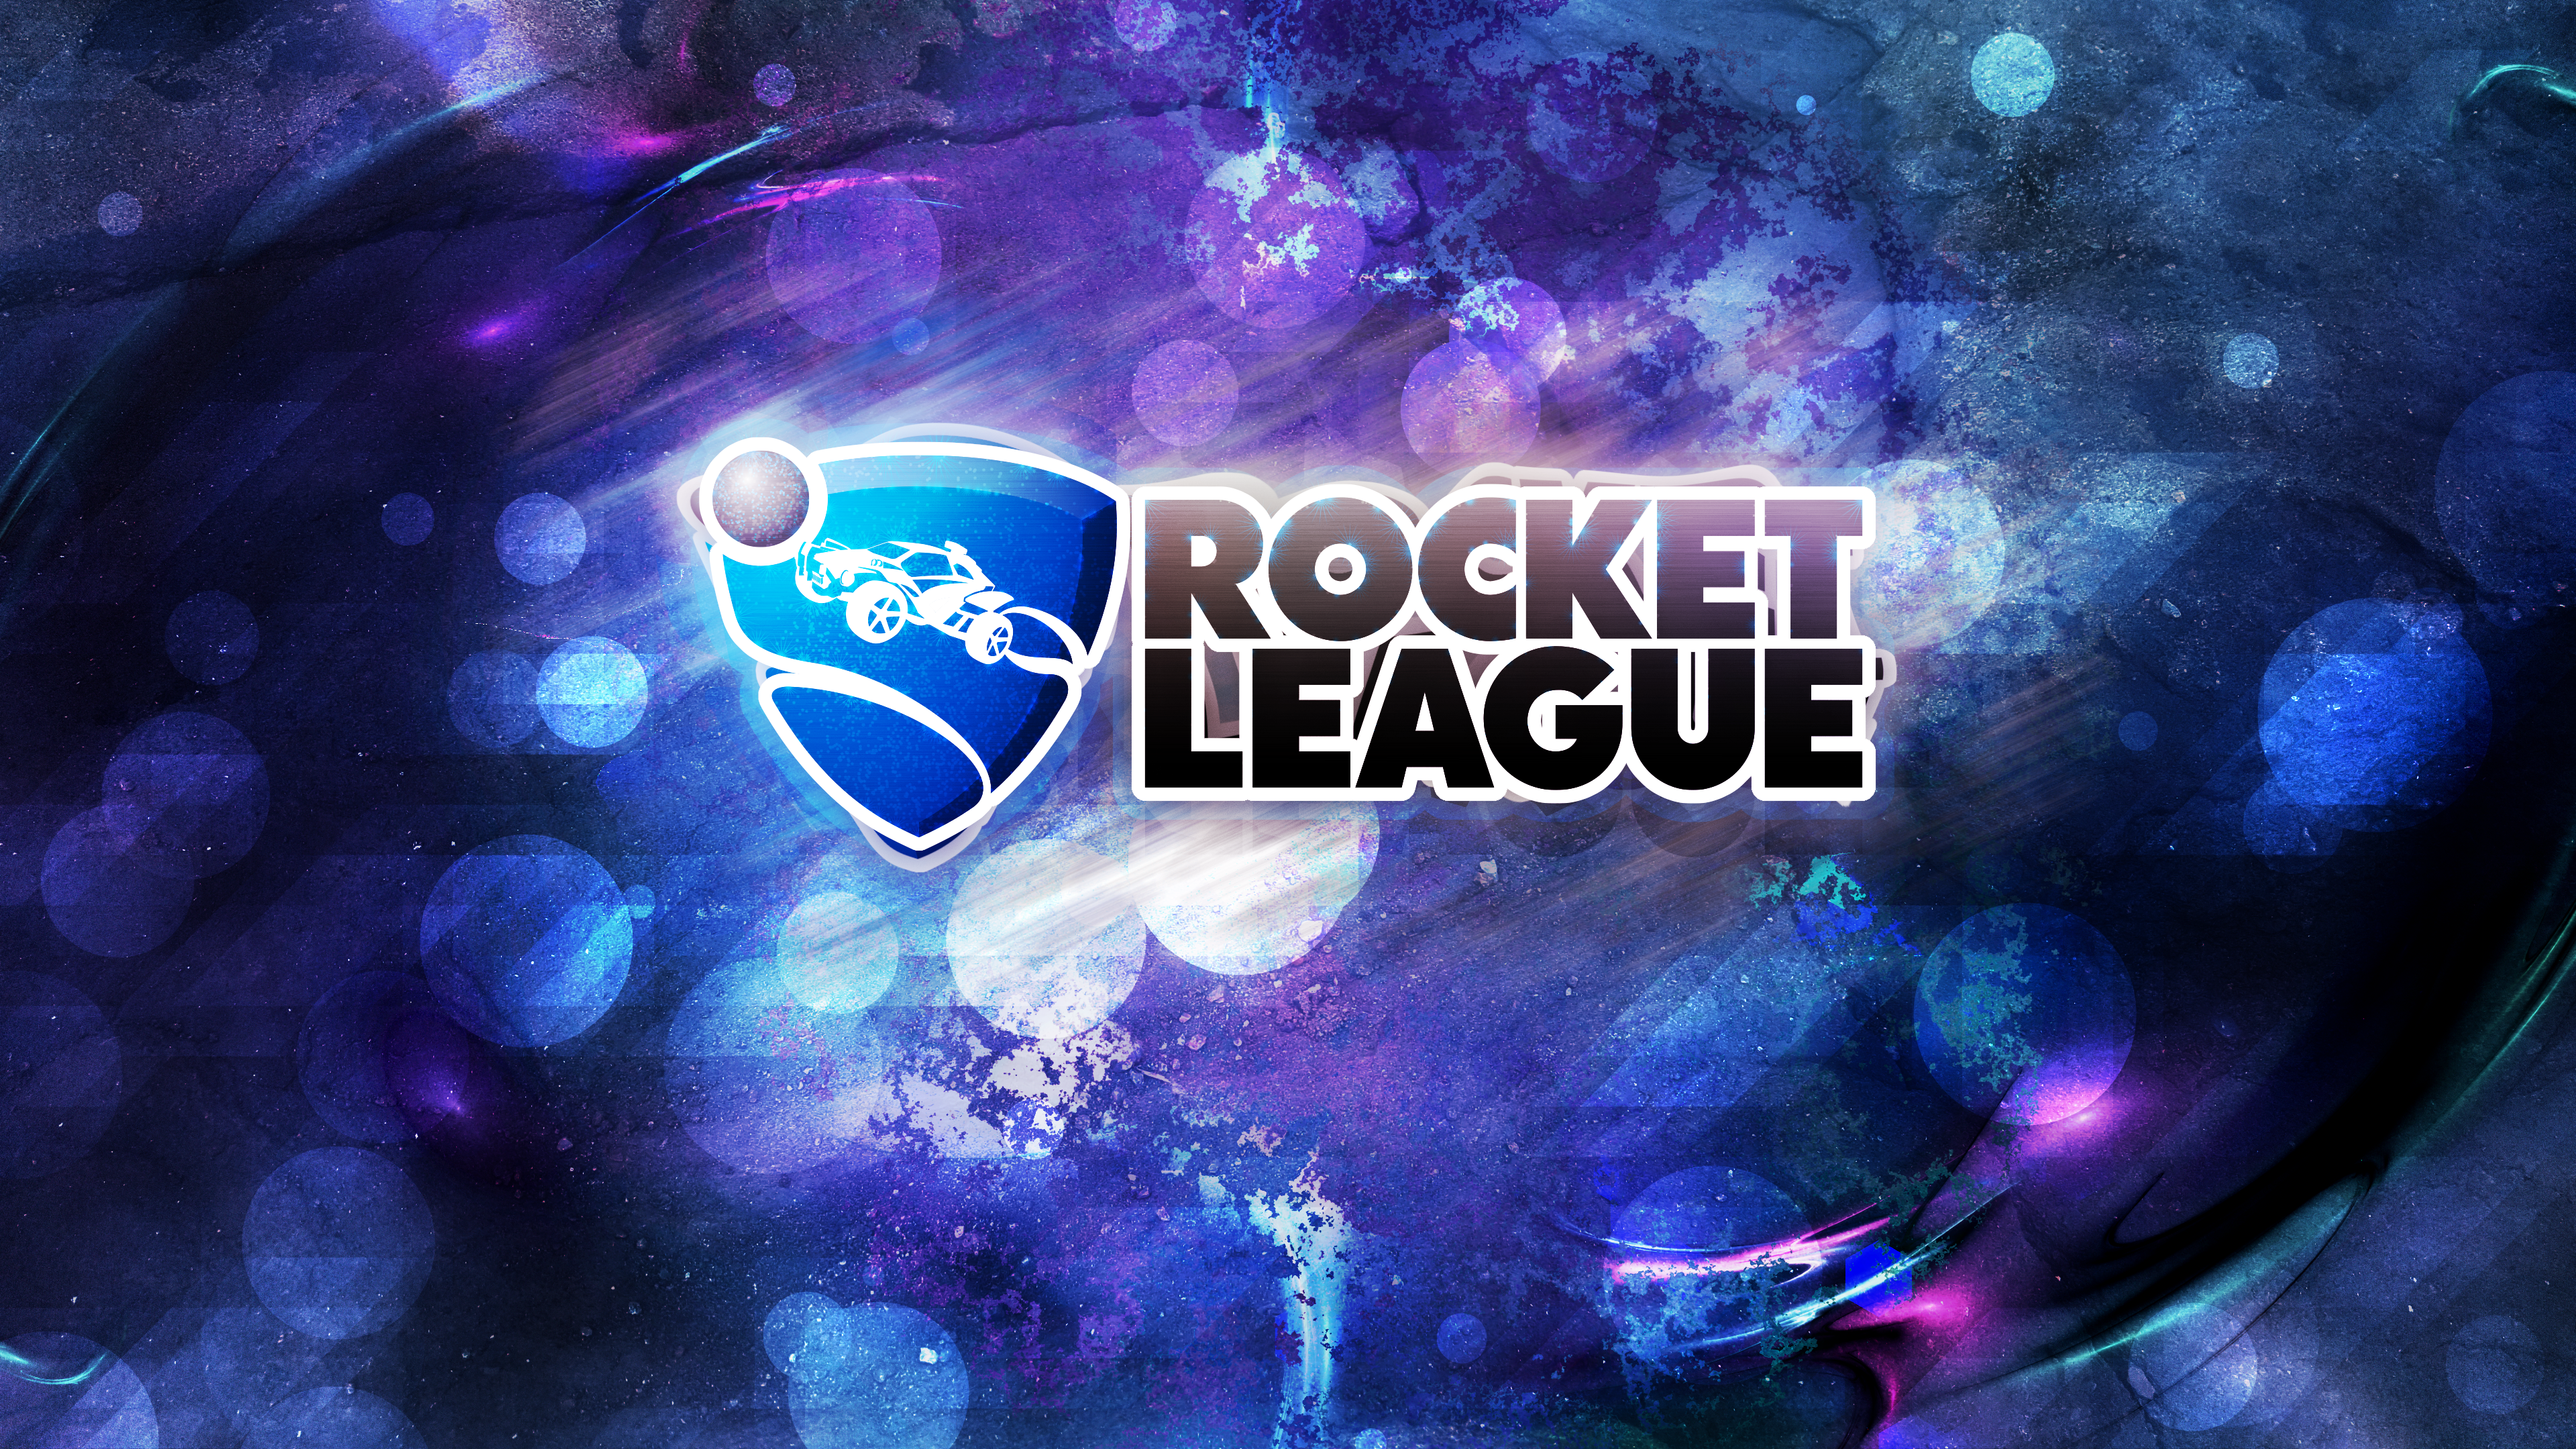 Rocket League Wallpapers